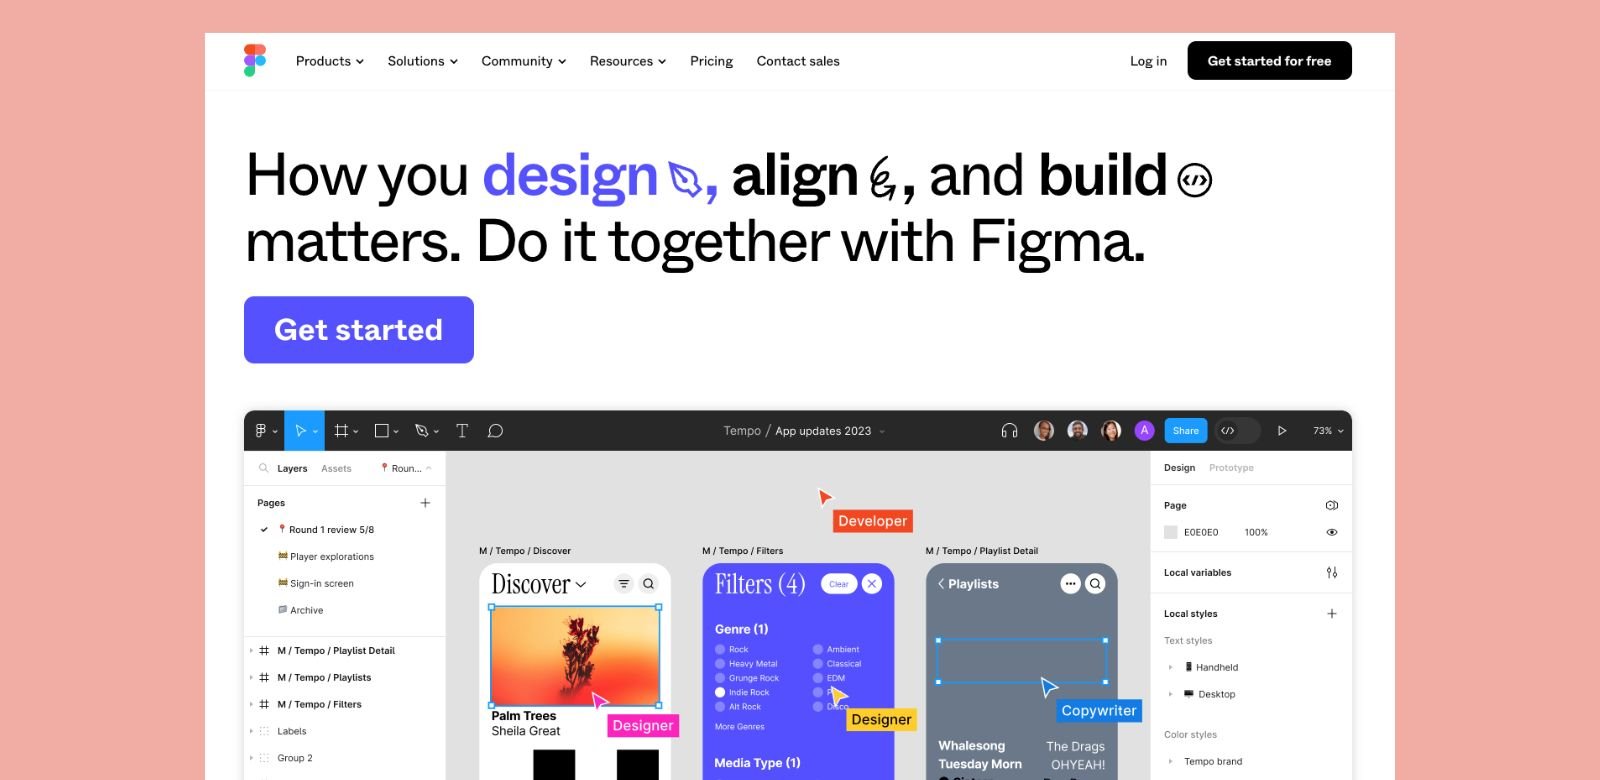 Figma's SaaS website